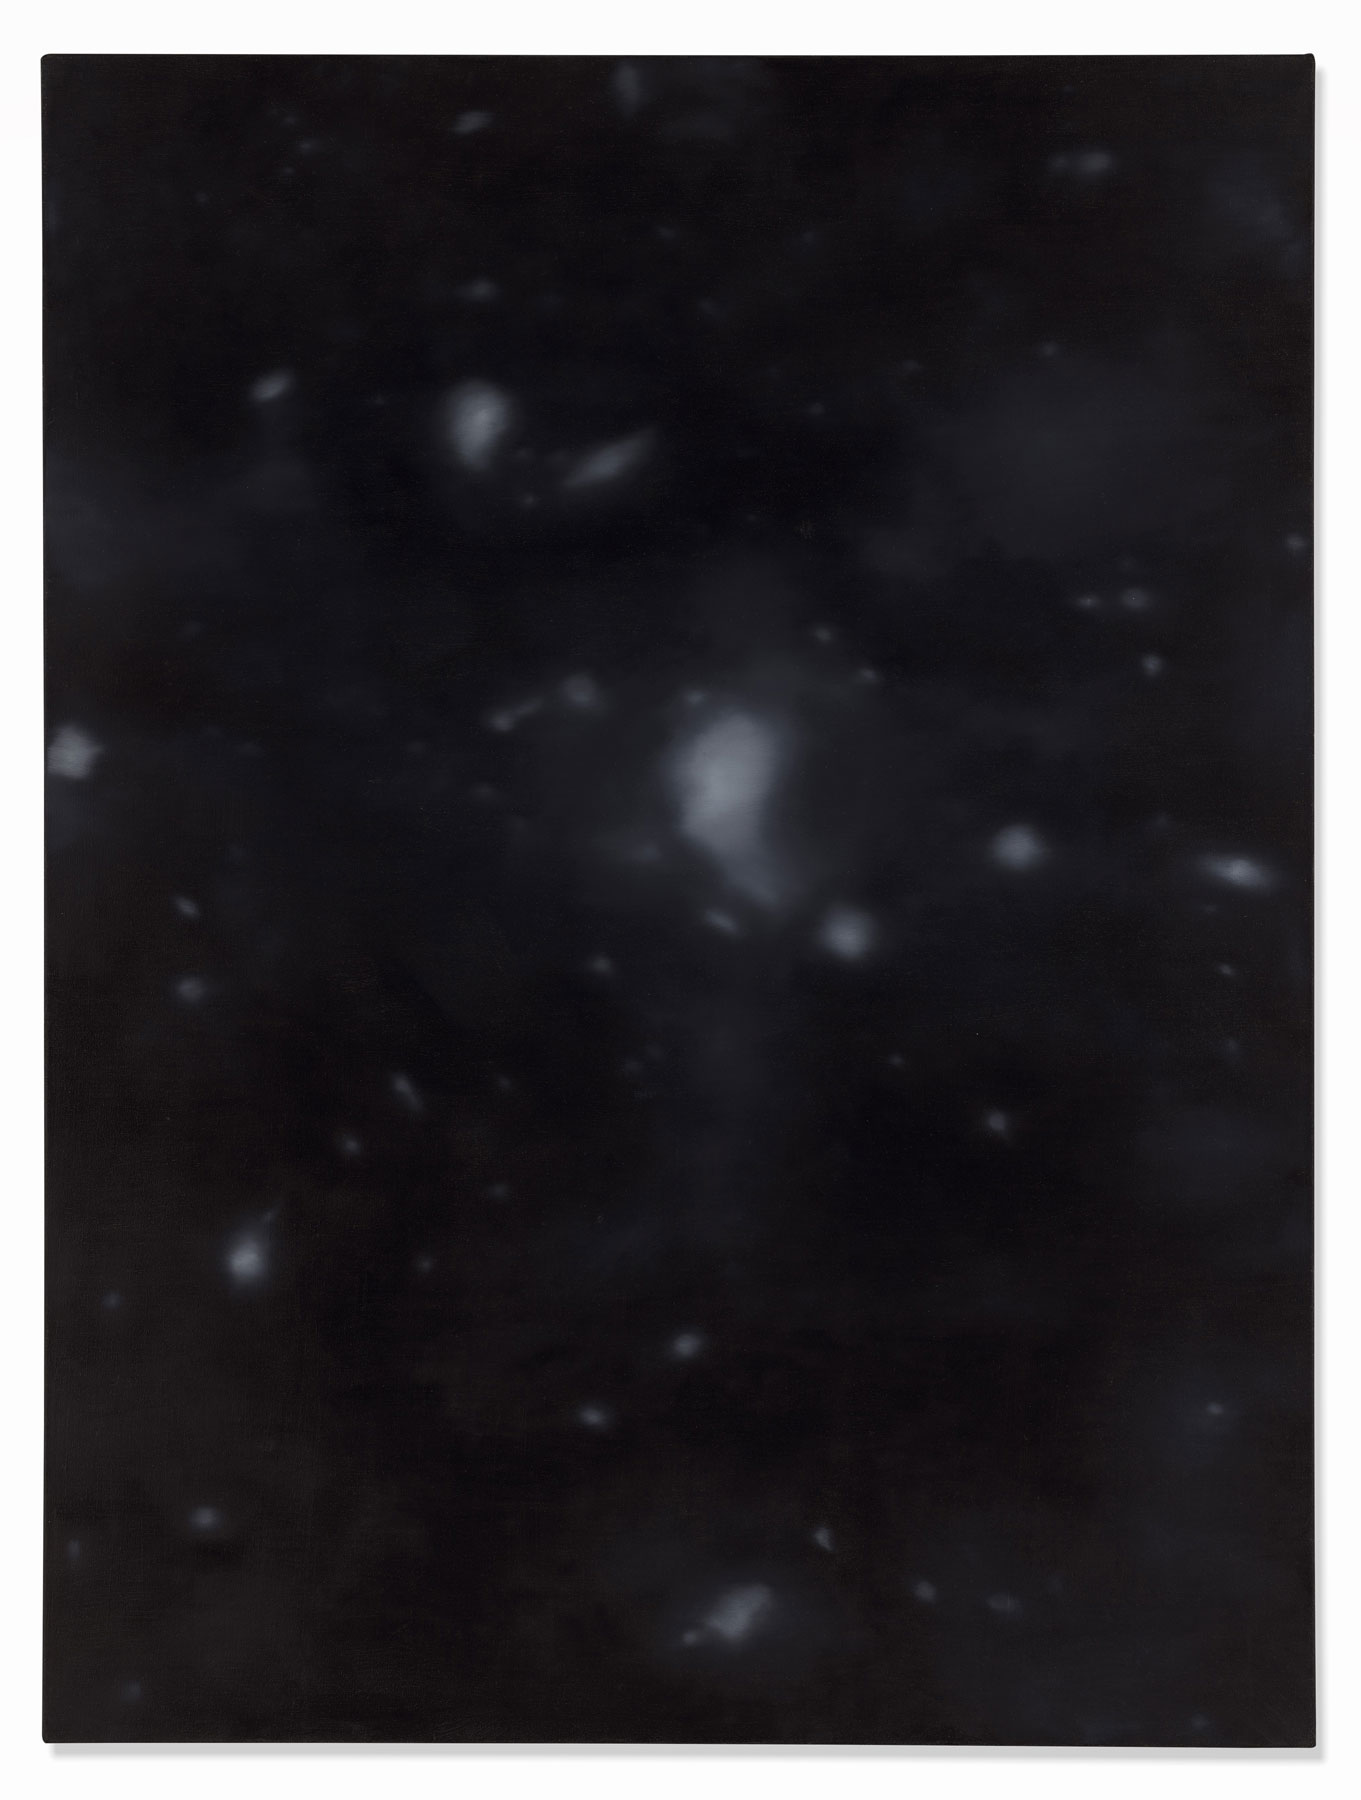 Gerhard Richter, Sternbild (Constellation) [Costellazione] (1969; olio su tela, 200 x 150,4 cm; Londra, Ben Brown Fine Arts, inv. RIC00059) 